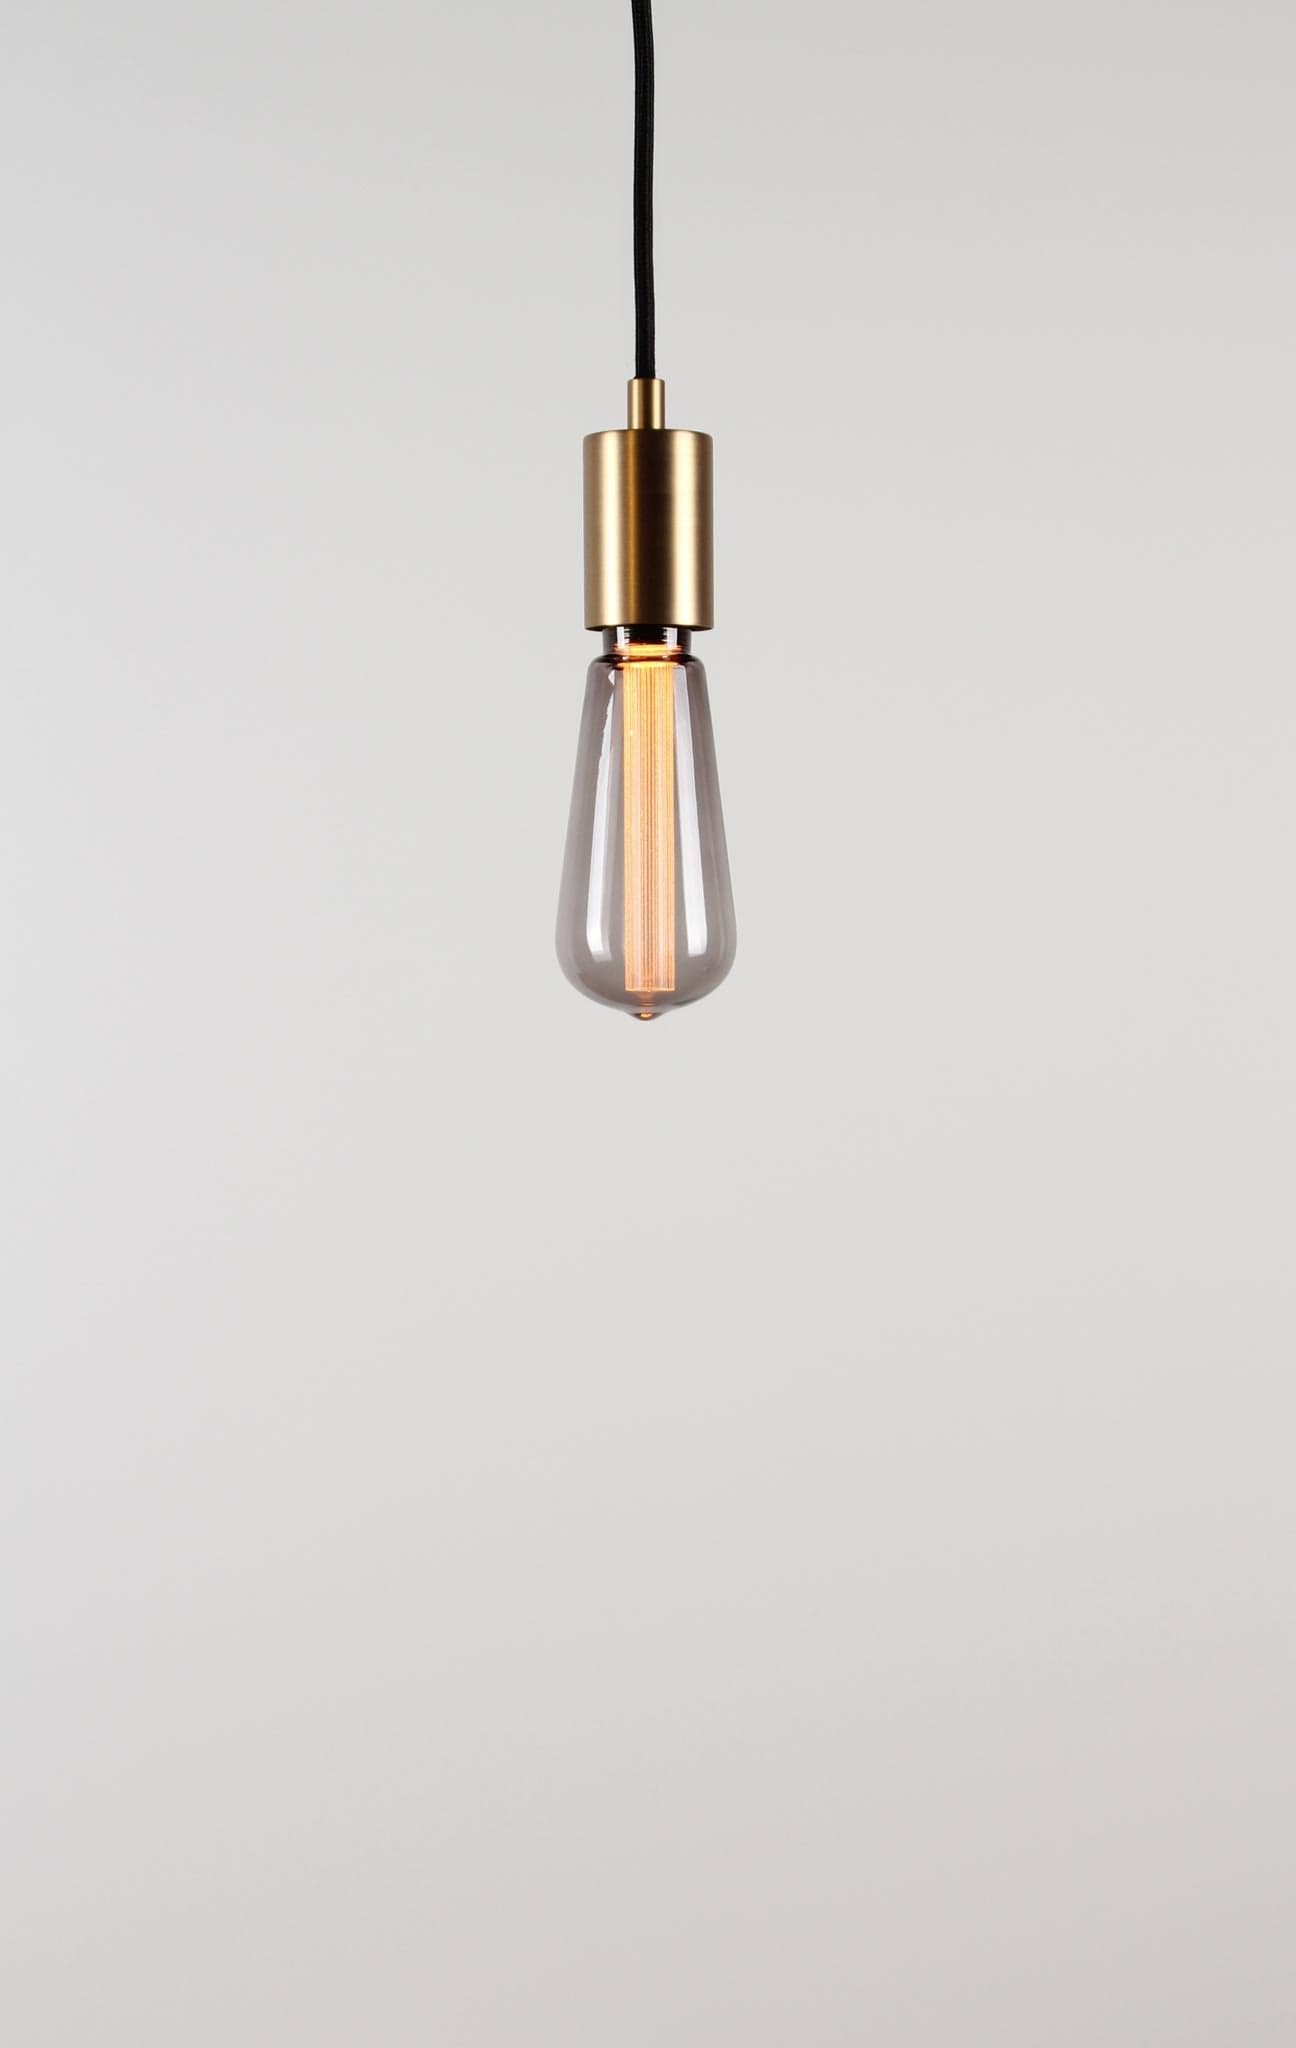 Vintlux E27 Dimmable LED Filament Lamp 2.3W ST60 50lm 1800K Rainn Edison Smoke - Lightspares